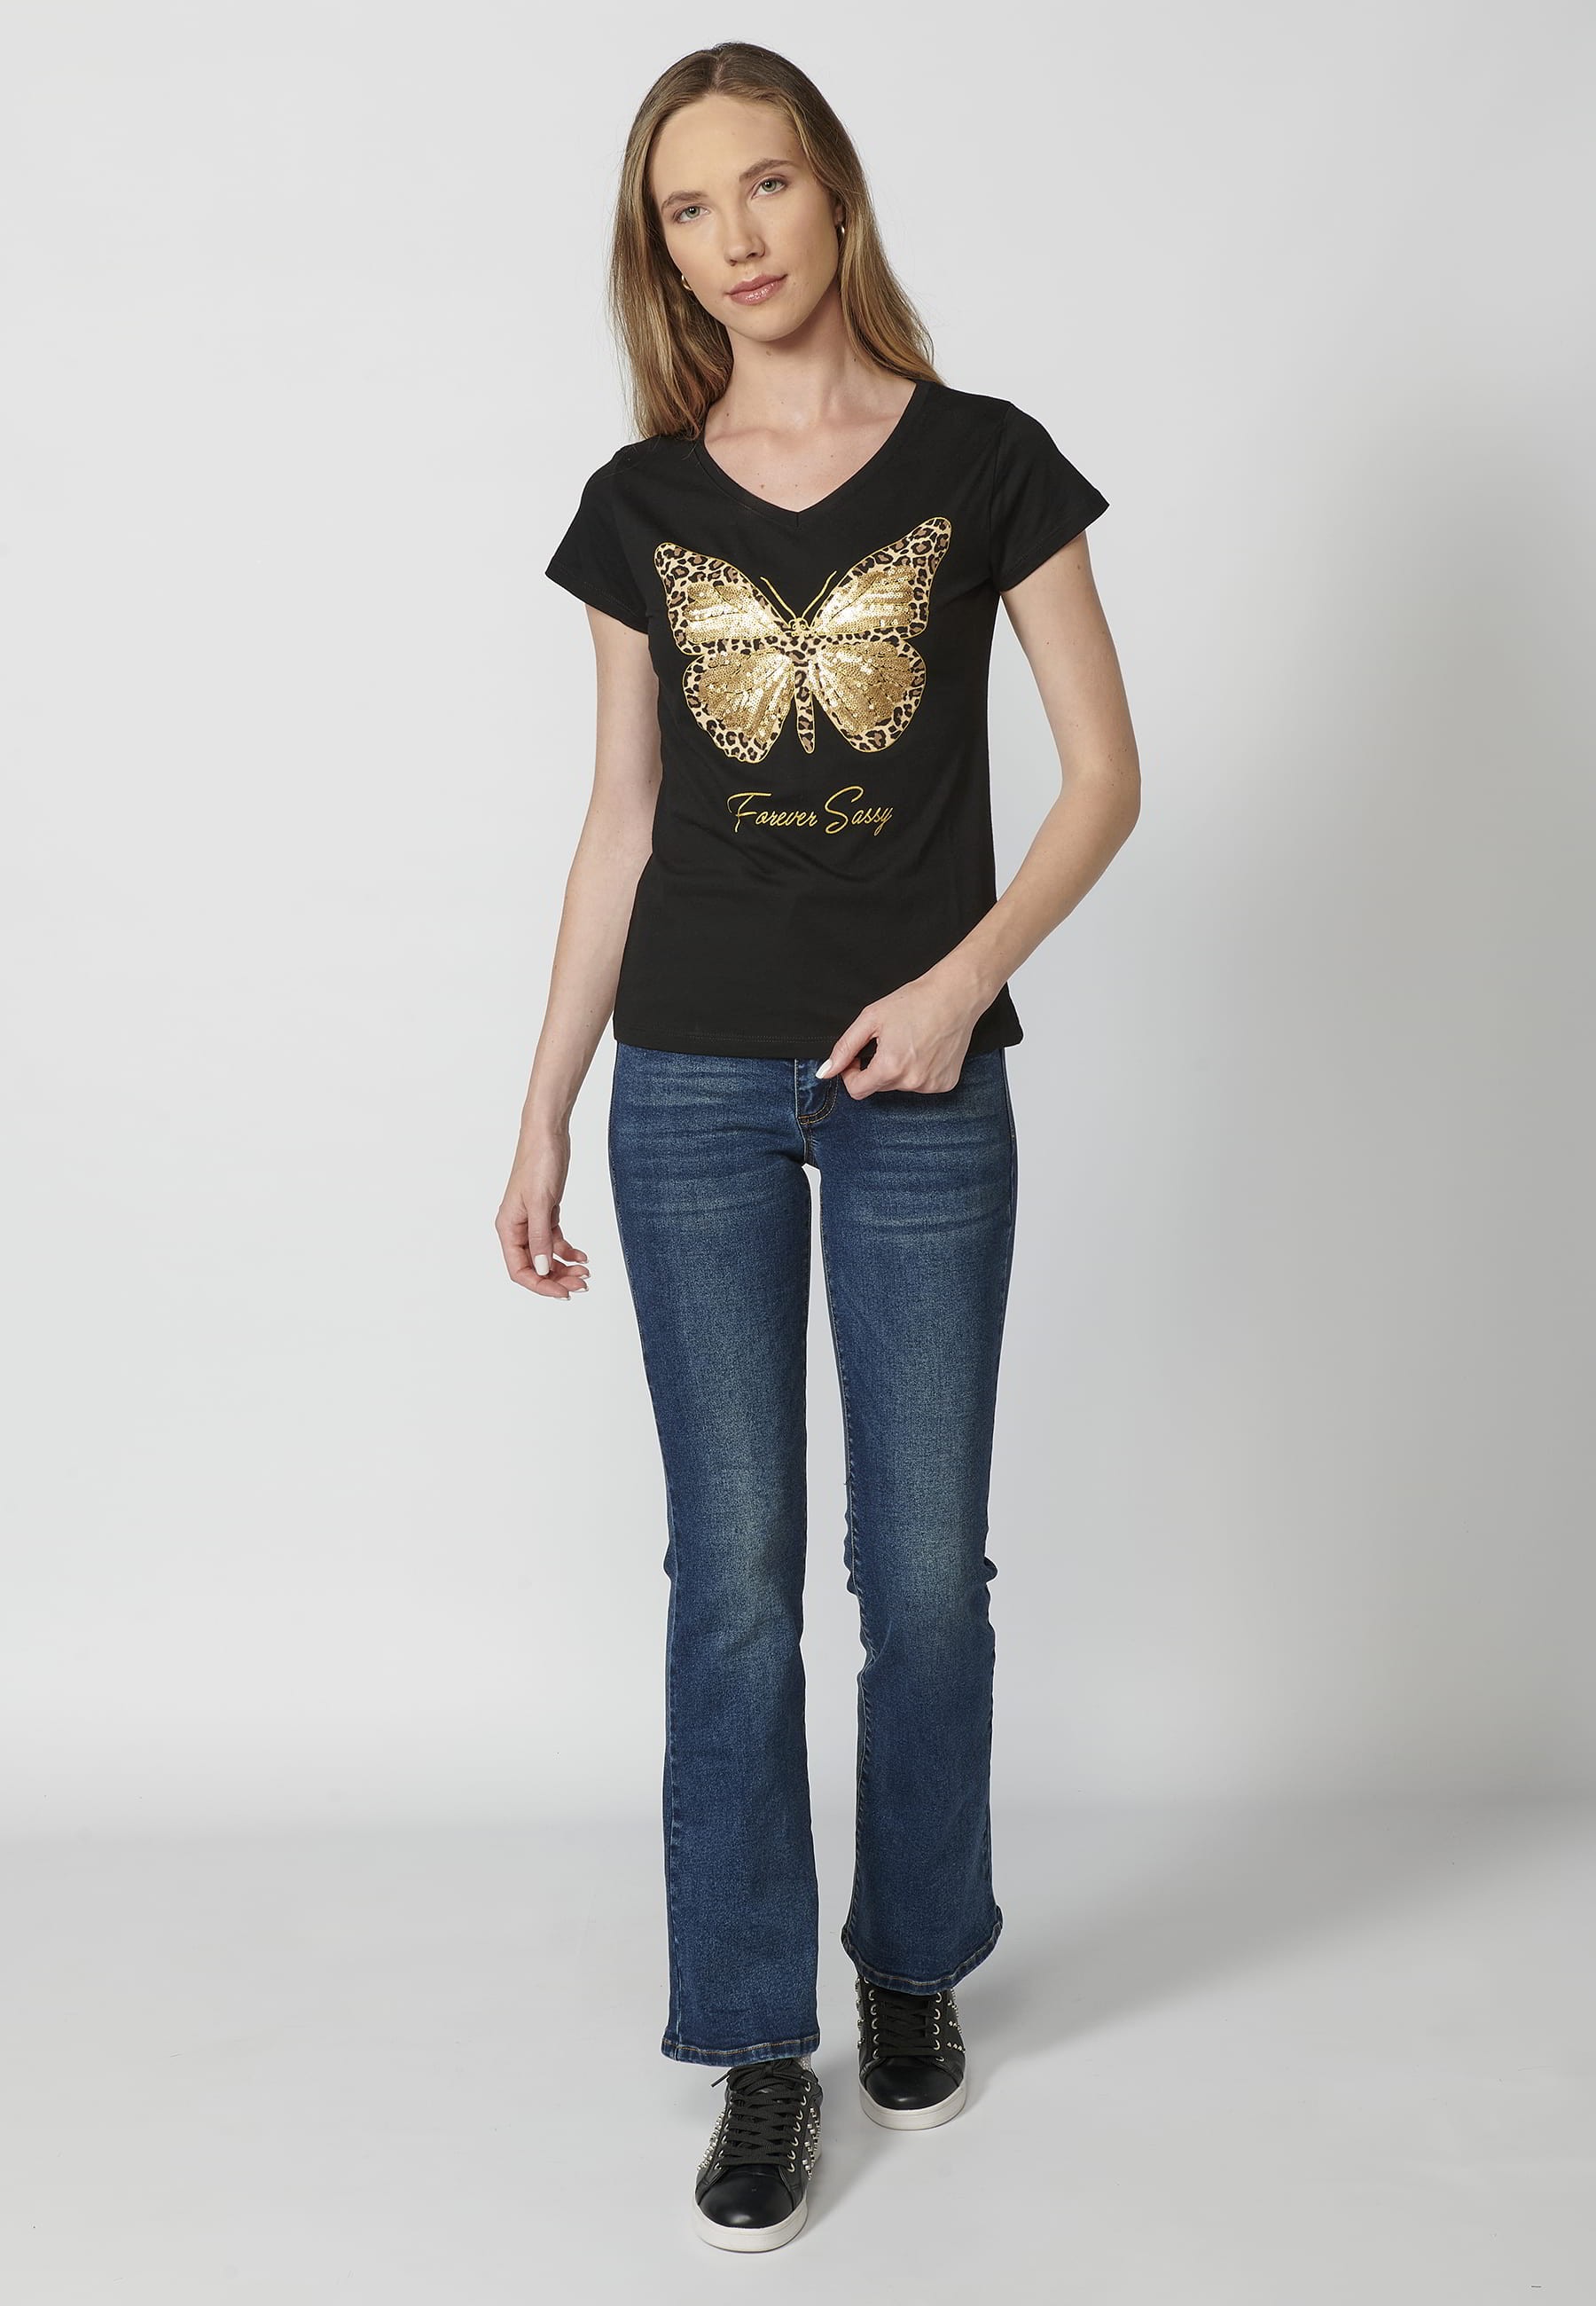 Women's Black Butterfly Front Print Round Neck Cotton Short Sleeve T-shirt 4